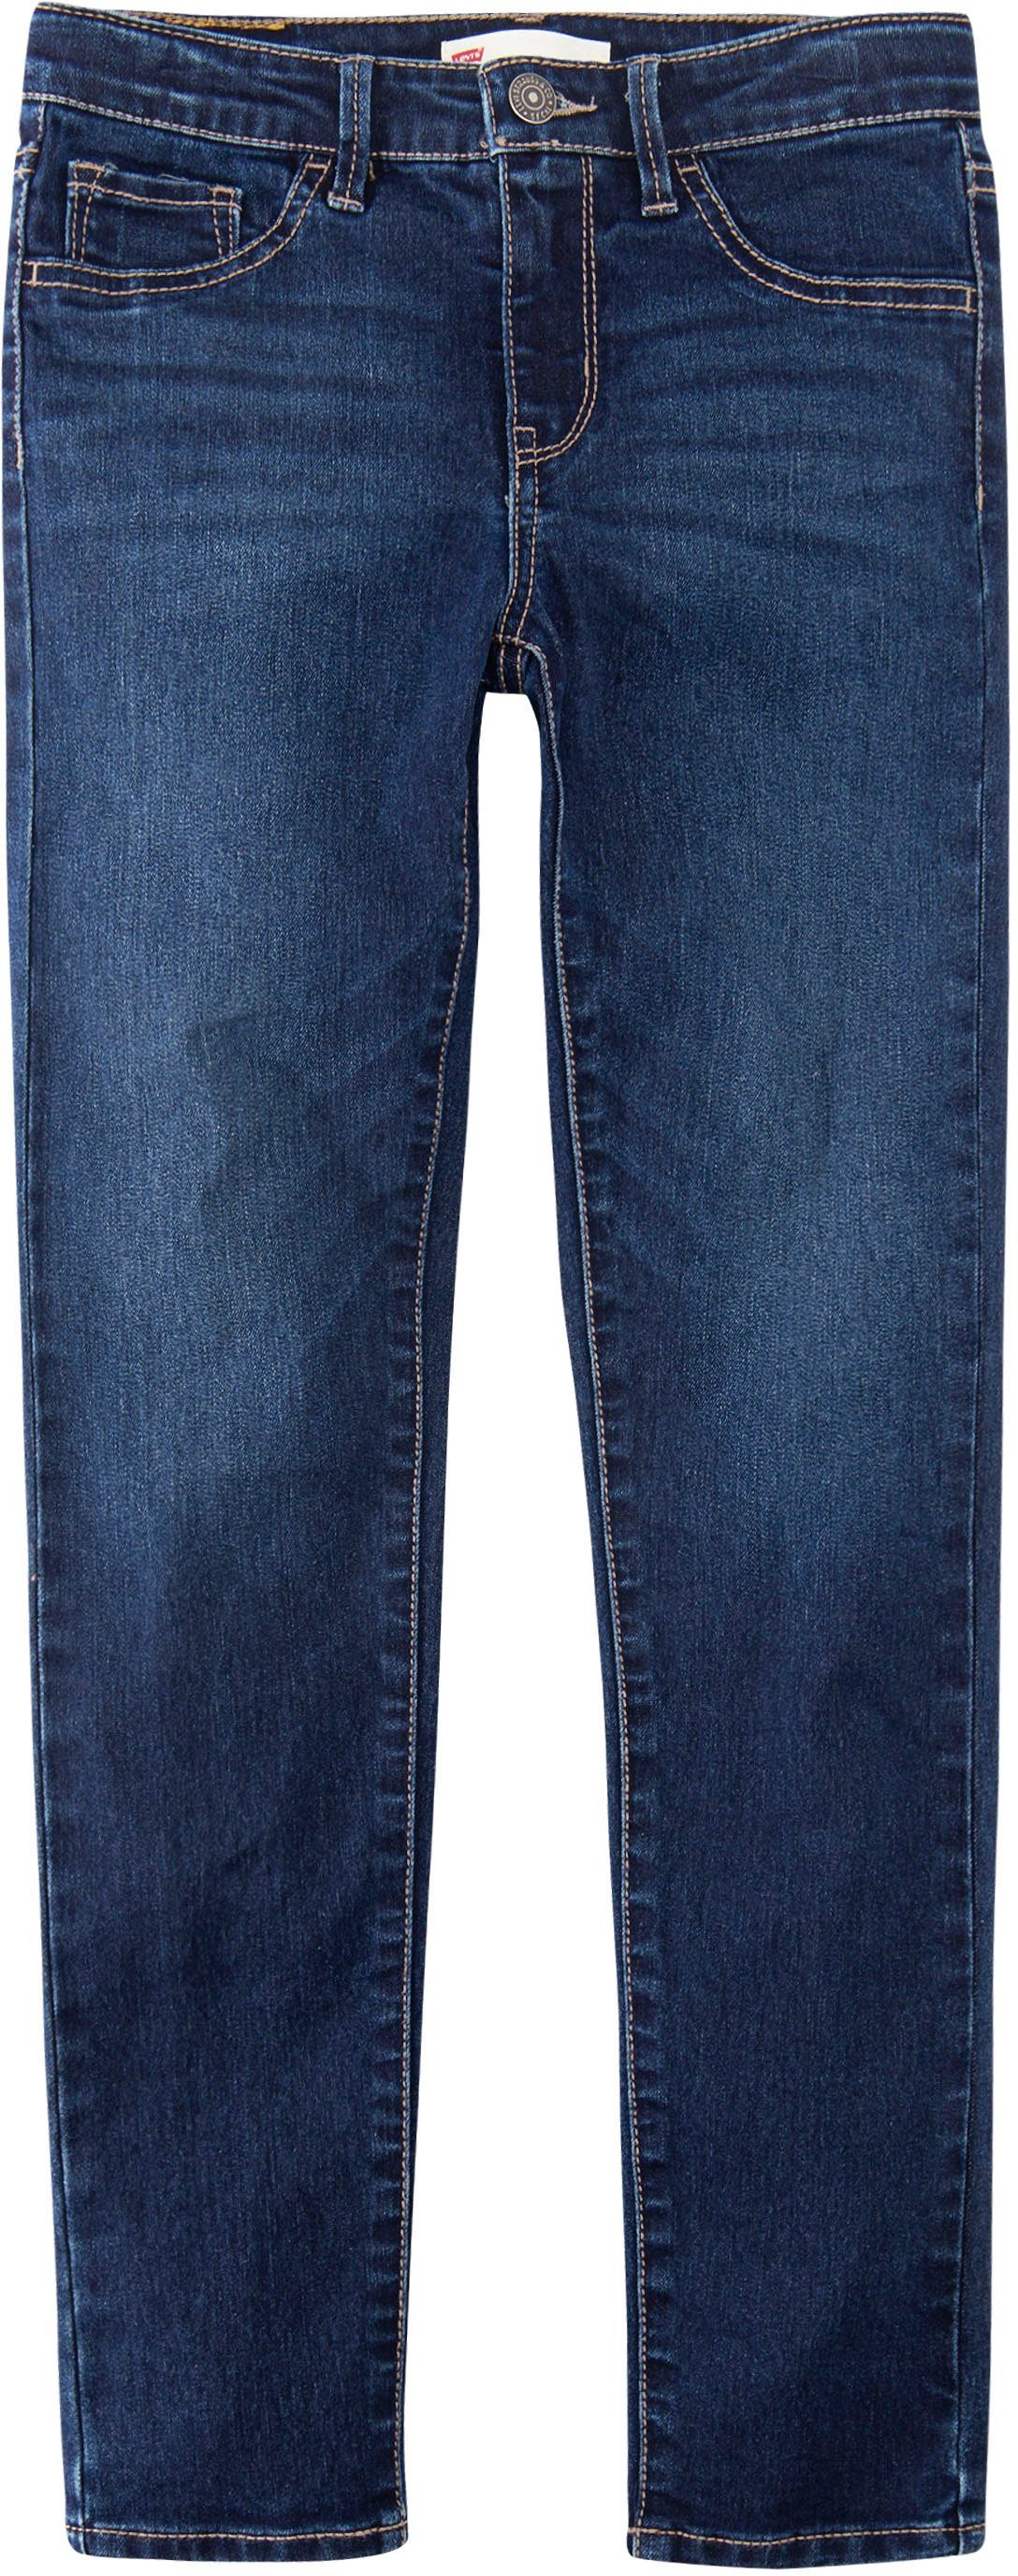 JEANS blue 710™ Kids dark SUPER denim GIRLS Levi's® used Stretch-Jeans SKINNY for FIT